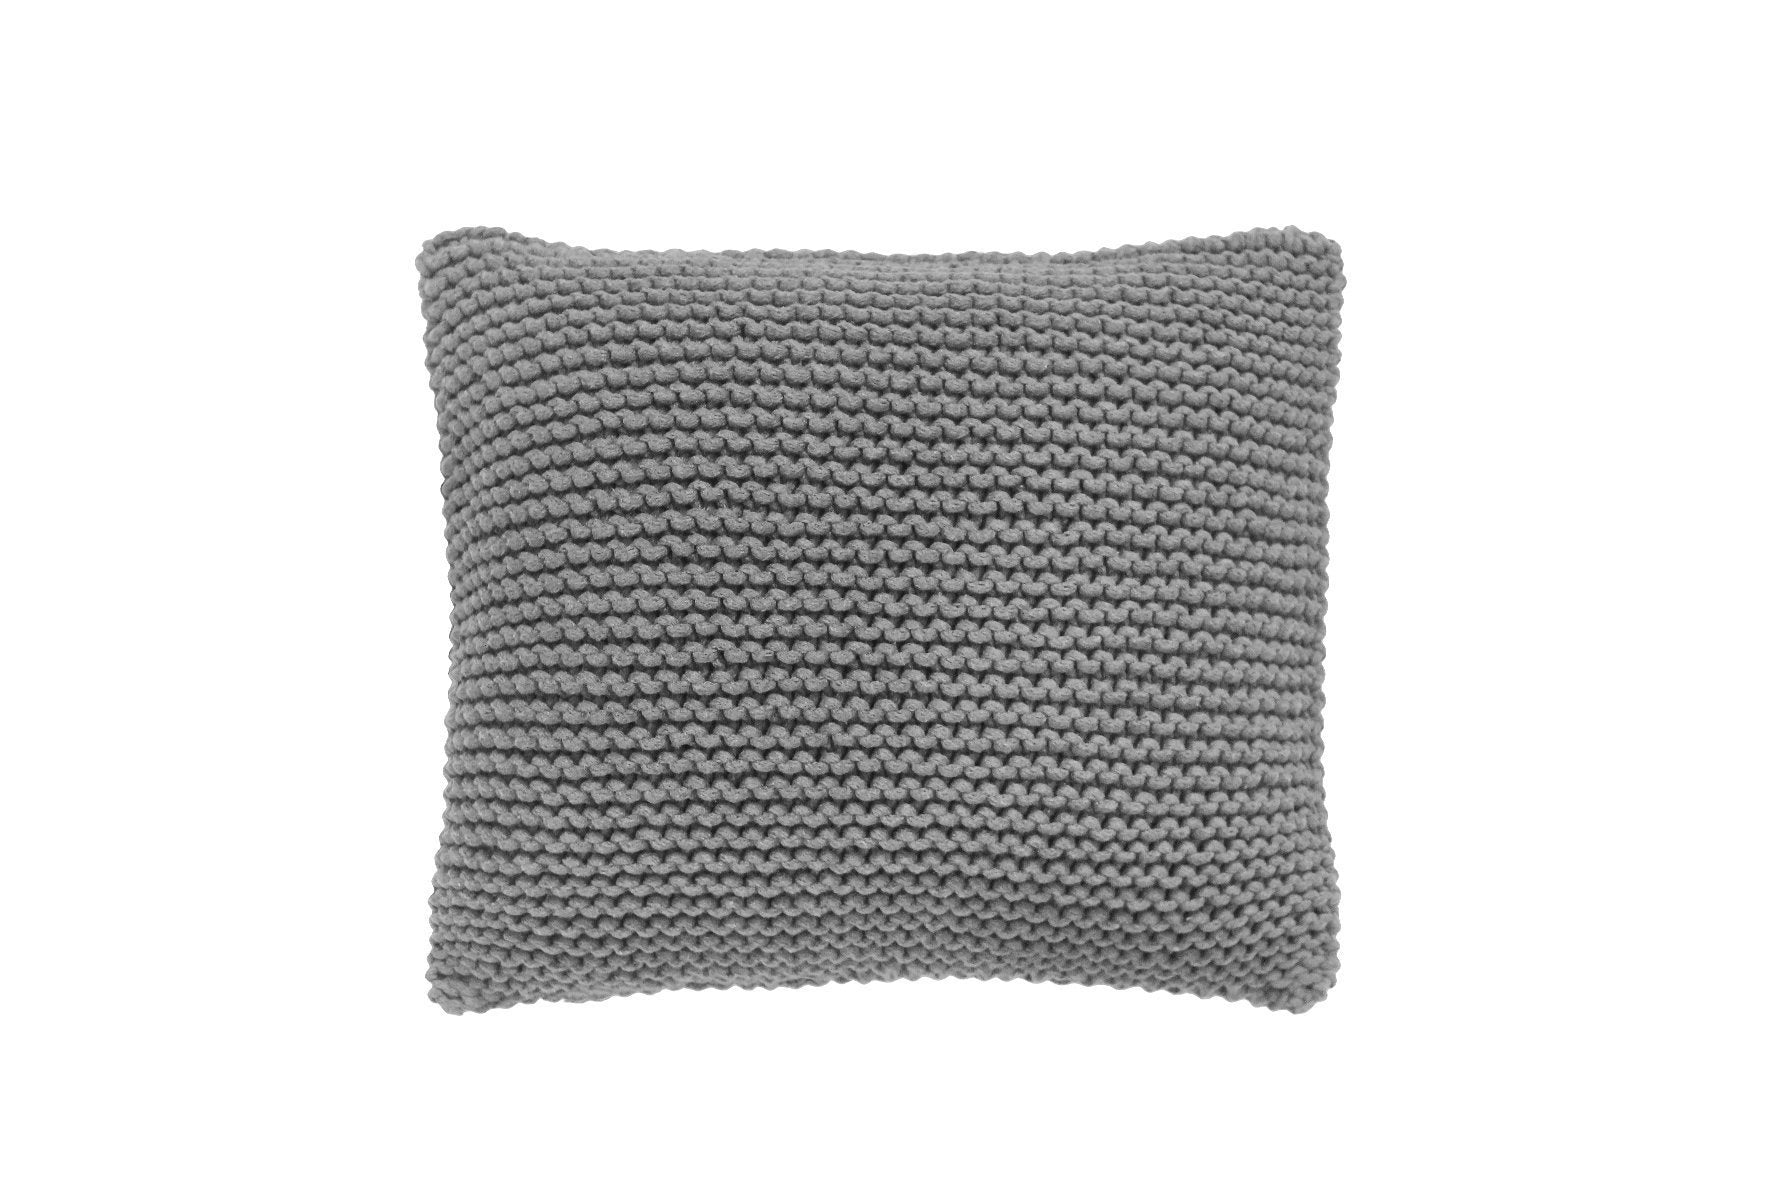 Zuri House Knitted Cushion | DARK GREY - 1 cushion 60 x 60 cm